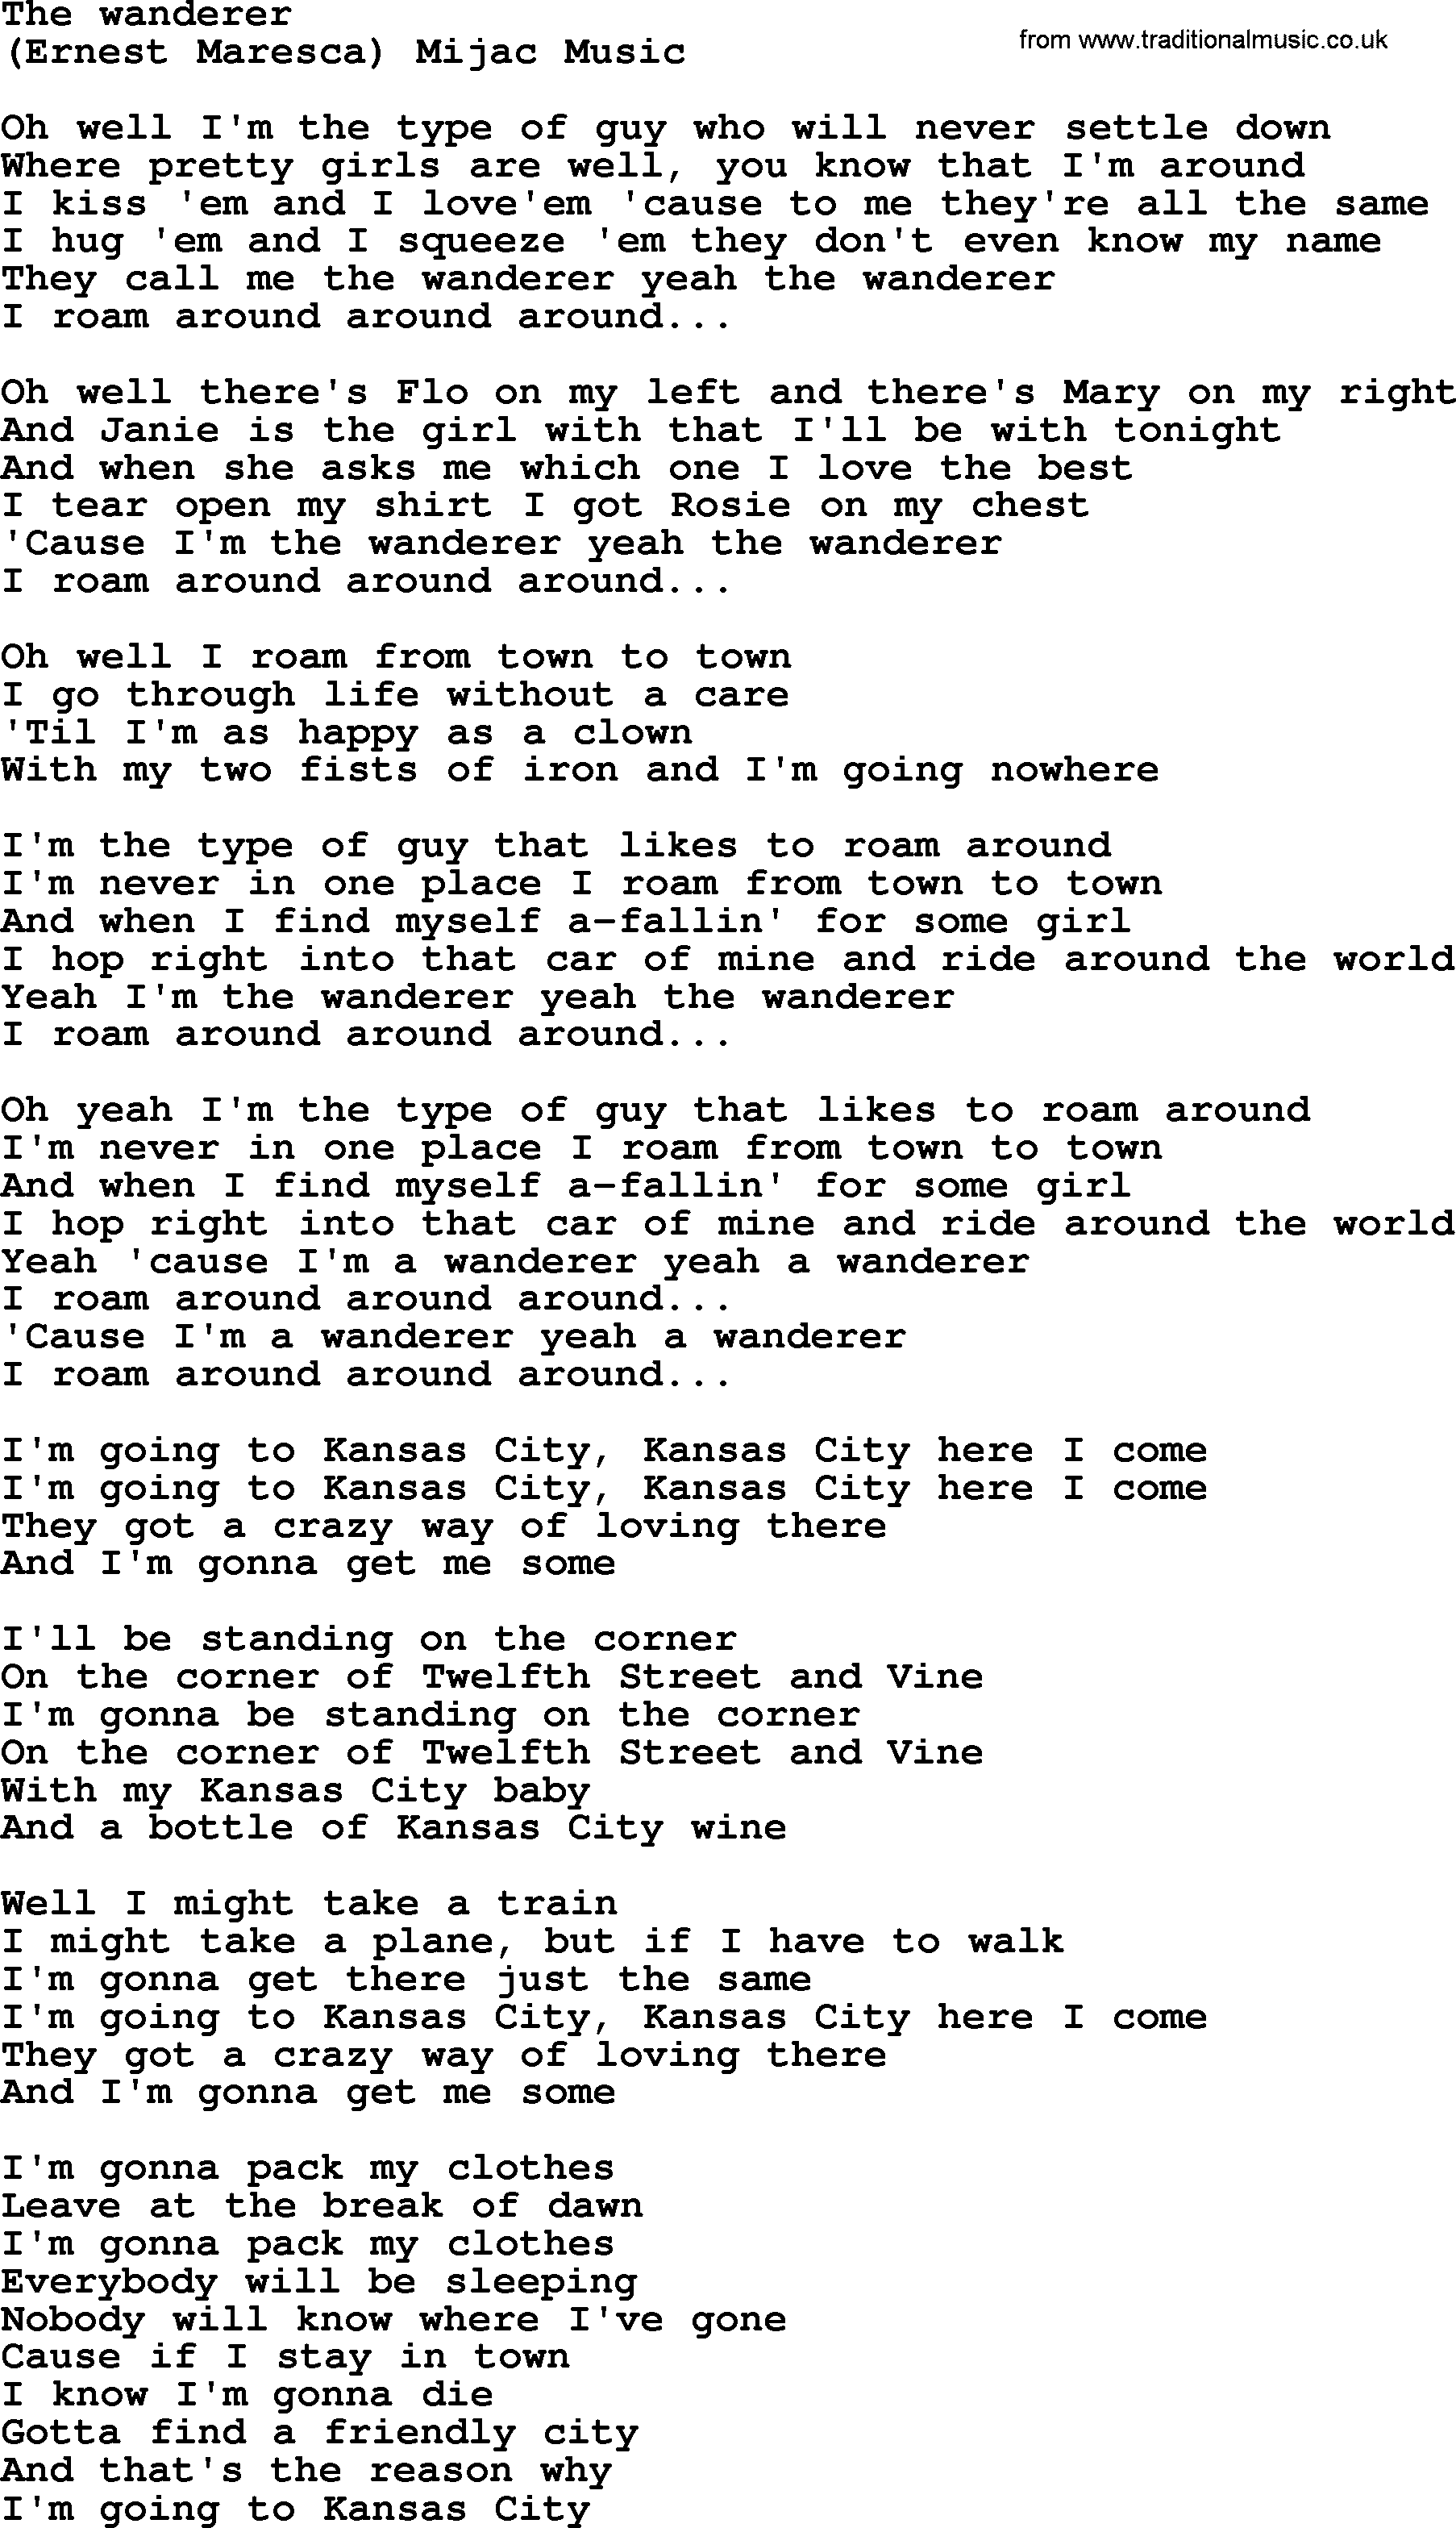 Bruce Springsteen song: The Wanderer lyrics